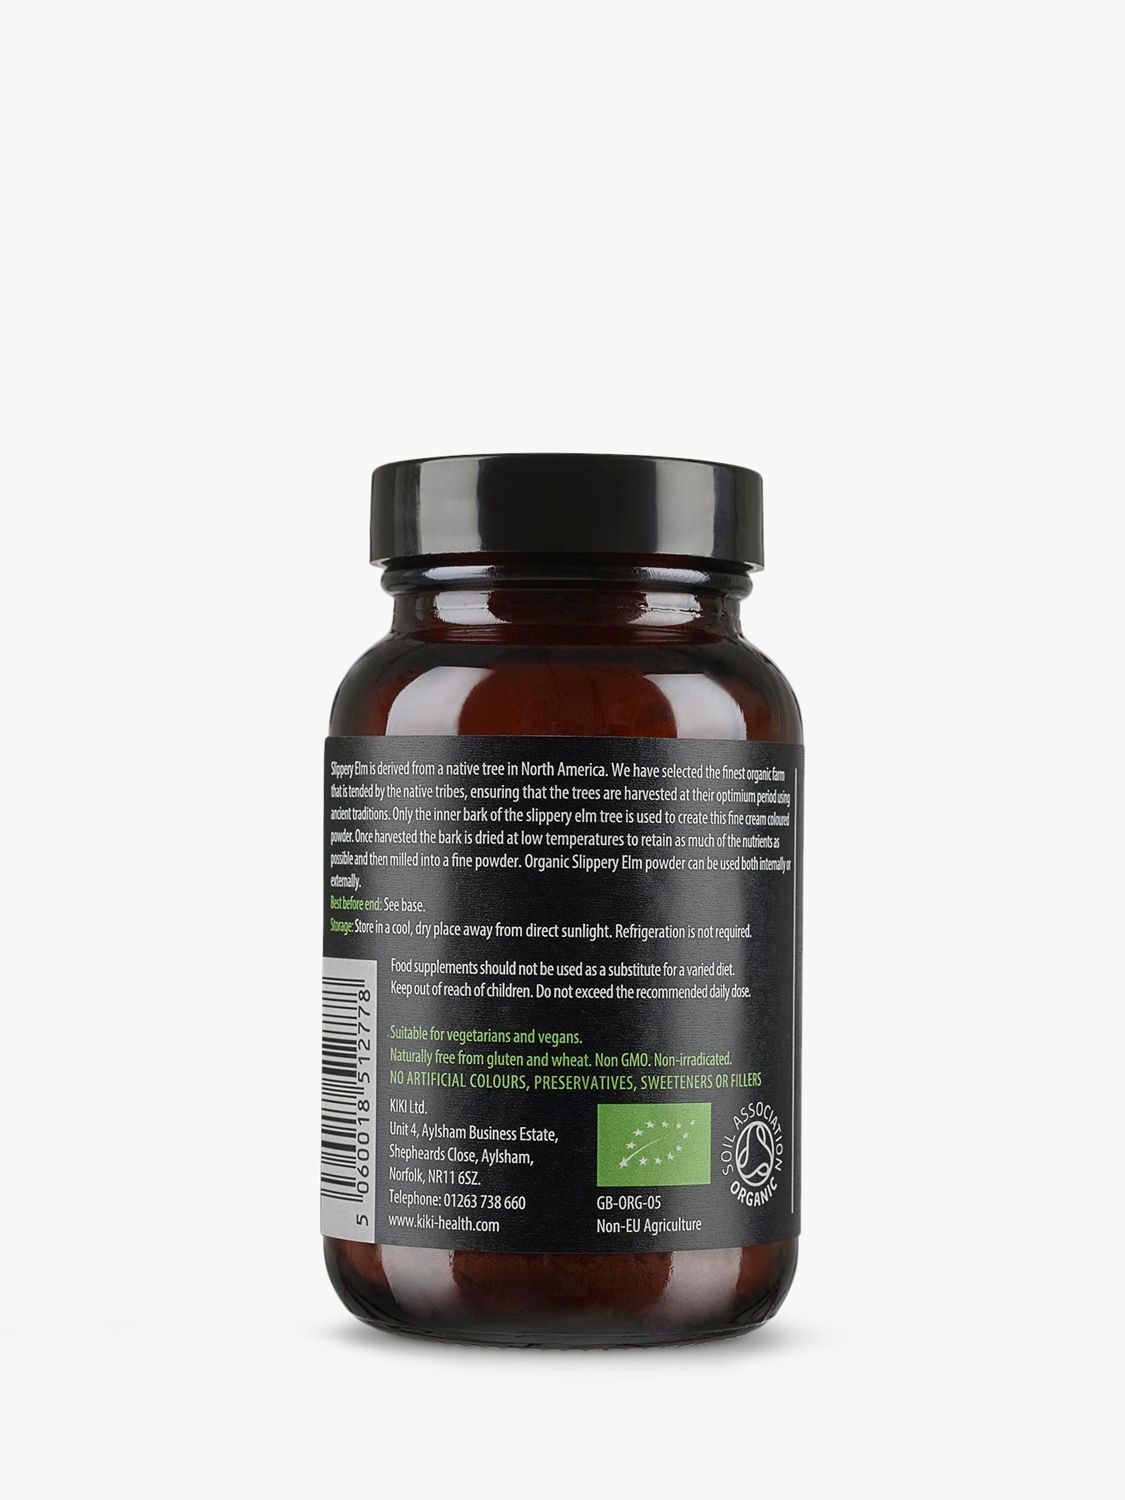 KIKI Health Organic Slippery Elm Powder, 45g 3